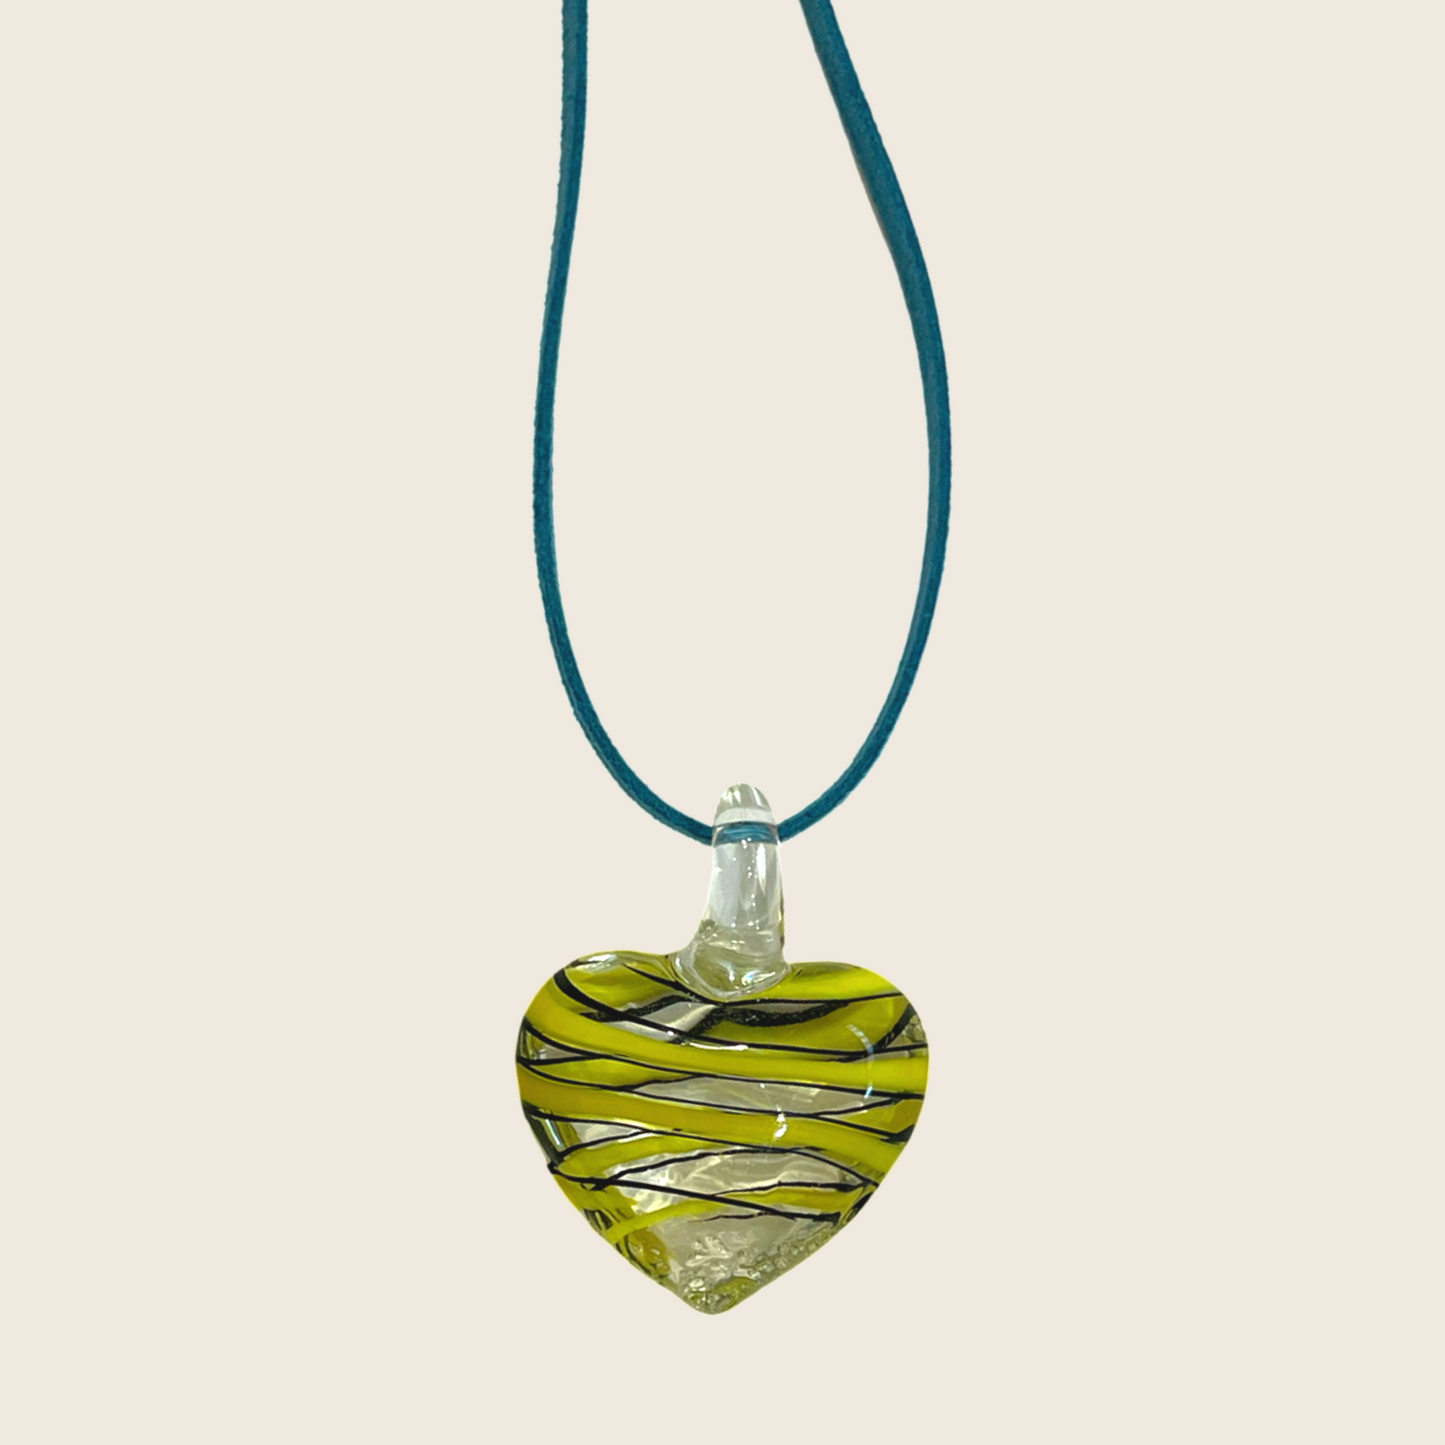 Striped Heart Glass Necklace - Lemon Lua Striped Heart Glass Necklace Lemon Lua Yellow / Black Lemon Lua Striped Heart Glass Necklace Striped Heart Glass Necklace